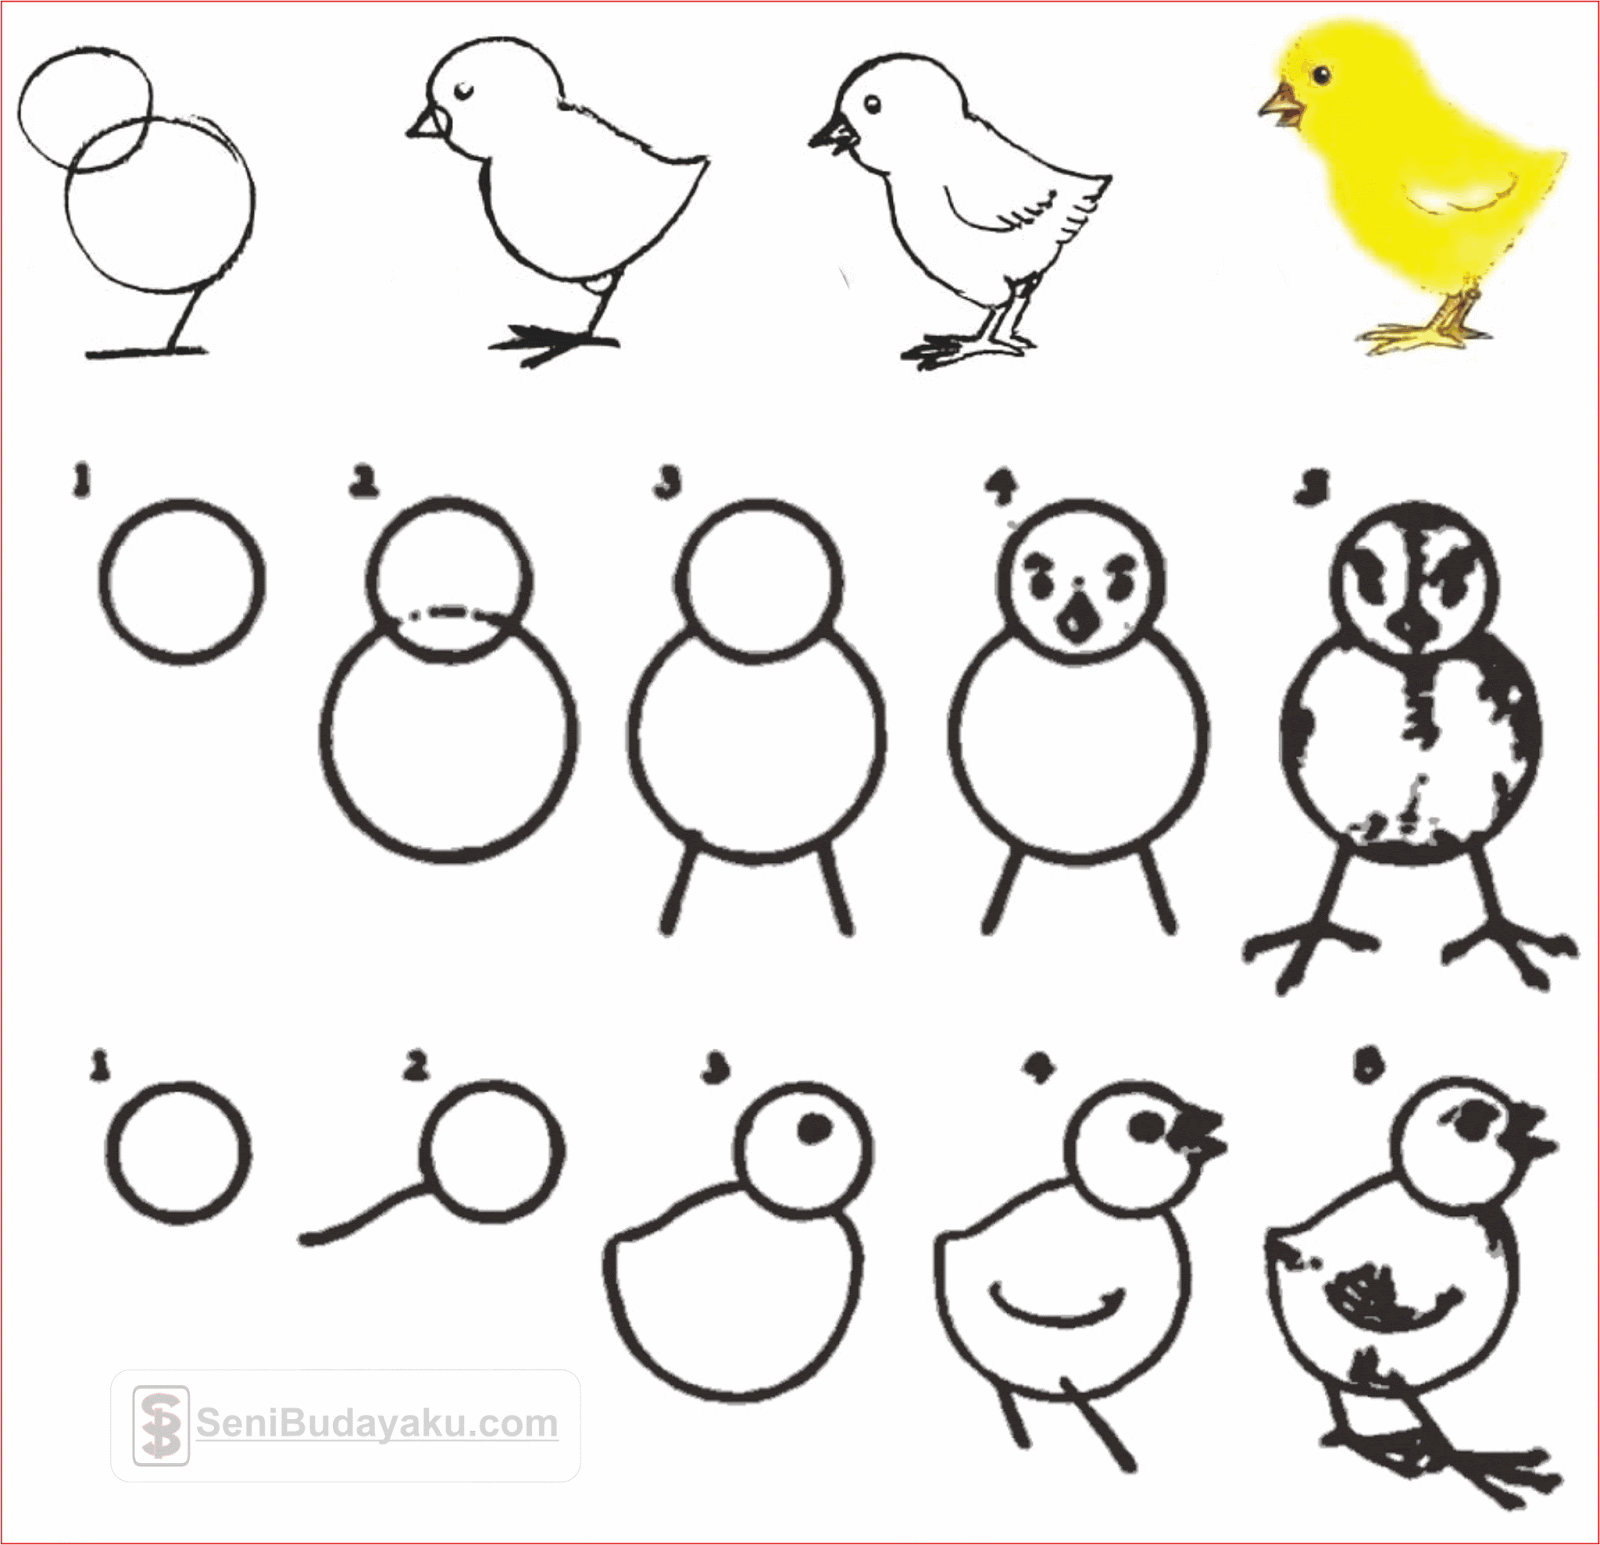 10 Cara Menggambar Ayam Dengan Mudah - Seni Budayaku